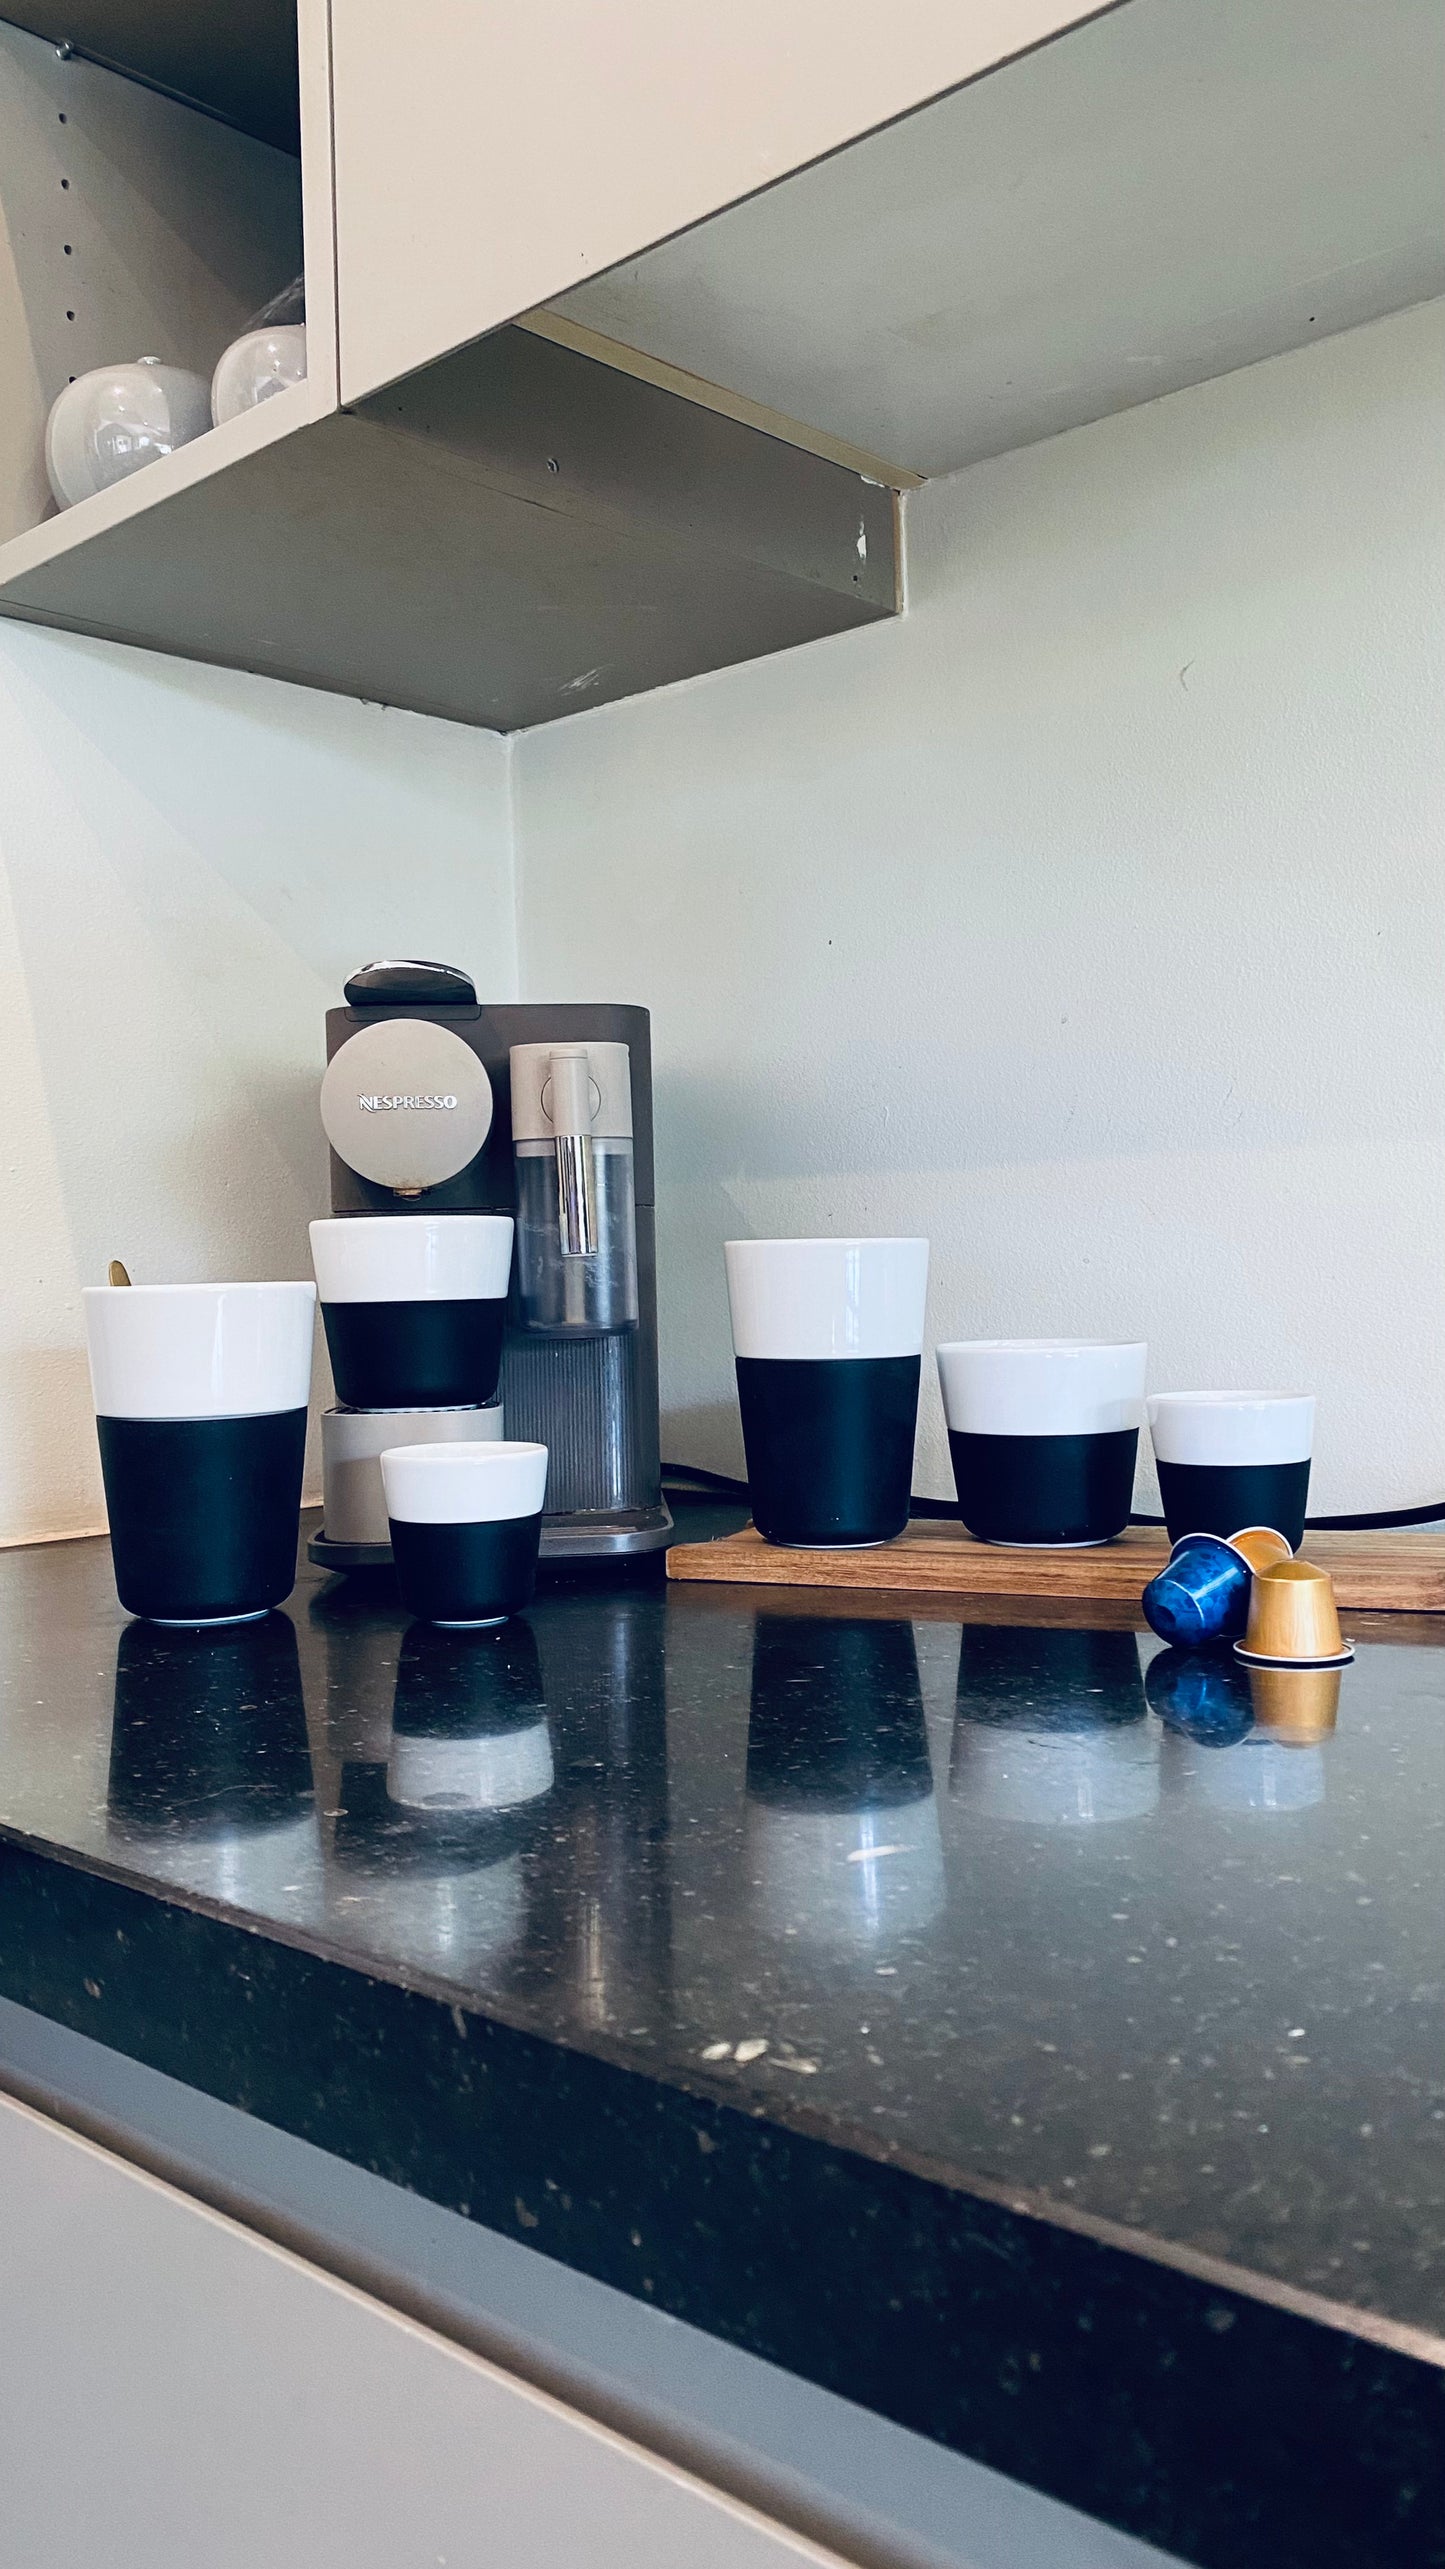 Set de 2 mugs Black&White